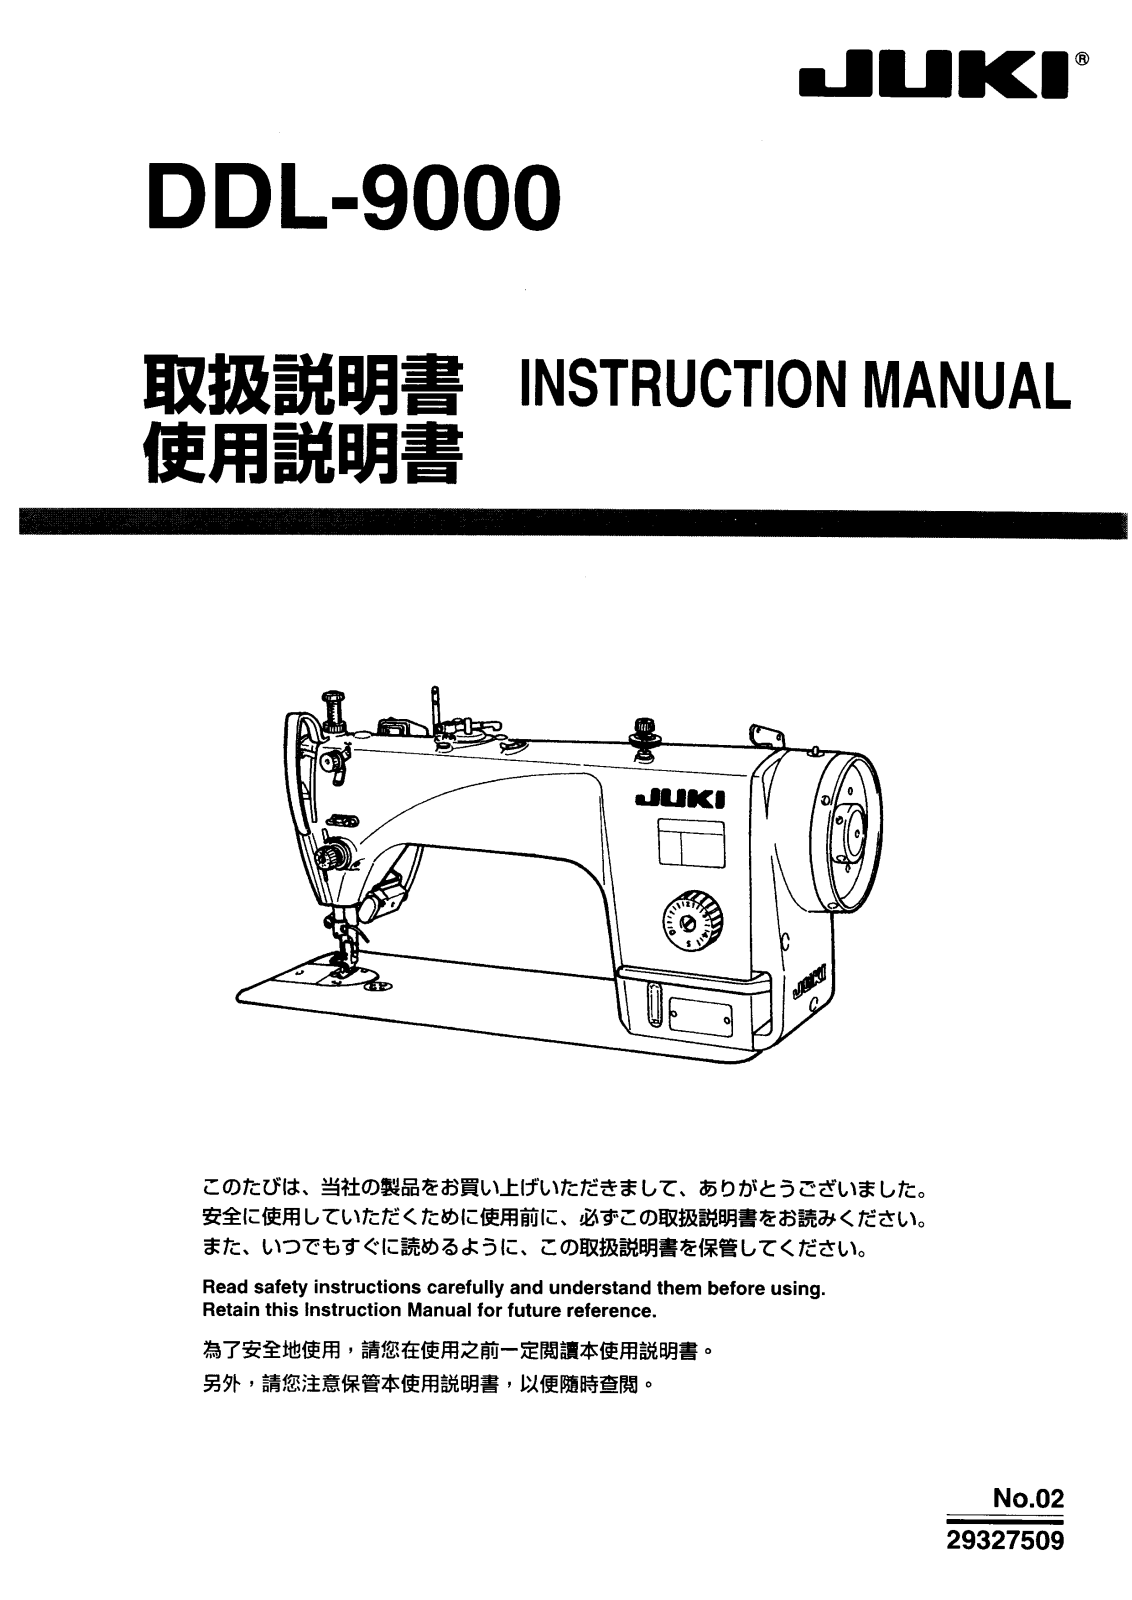 JUKI DDL-9000 INSTRUCTION Manual